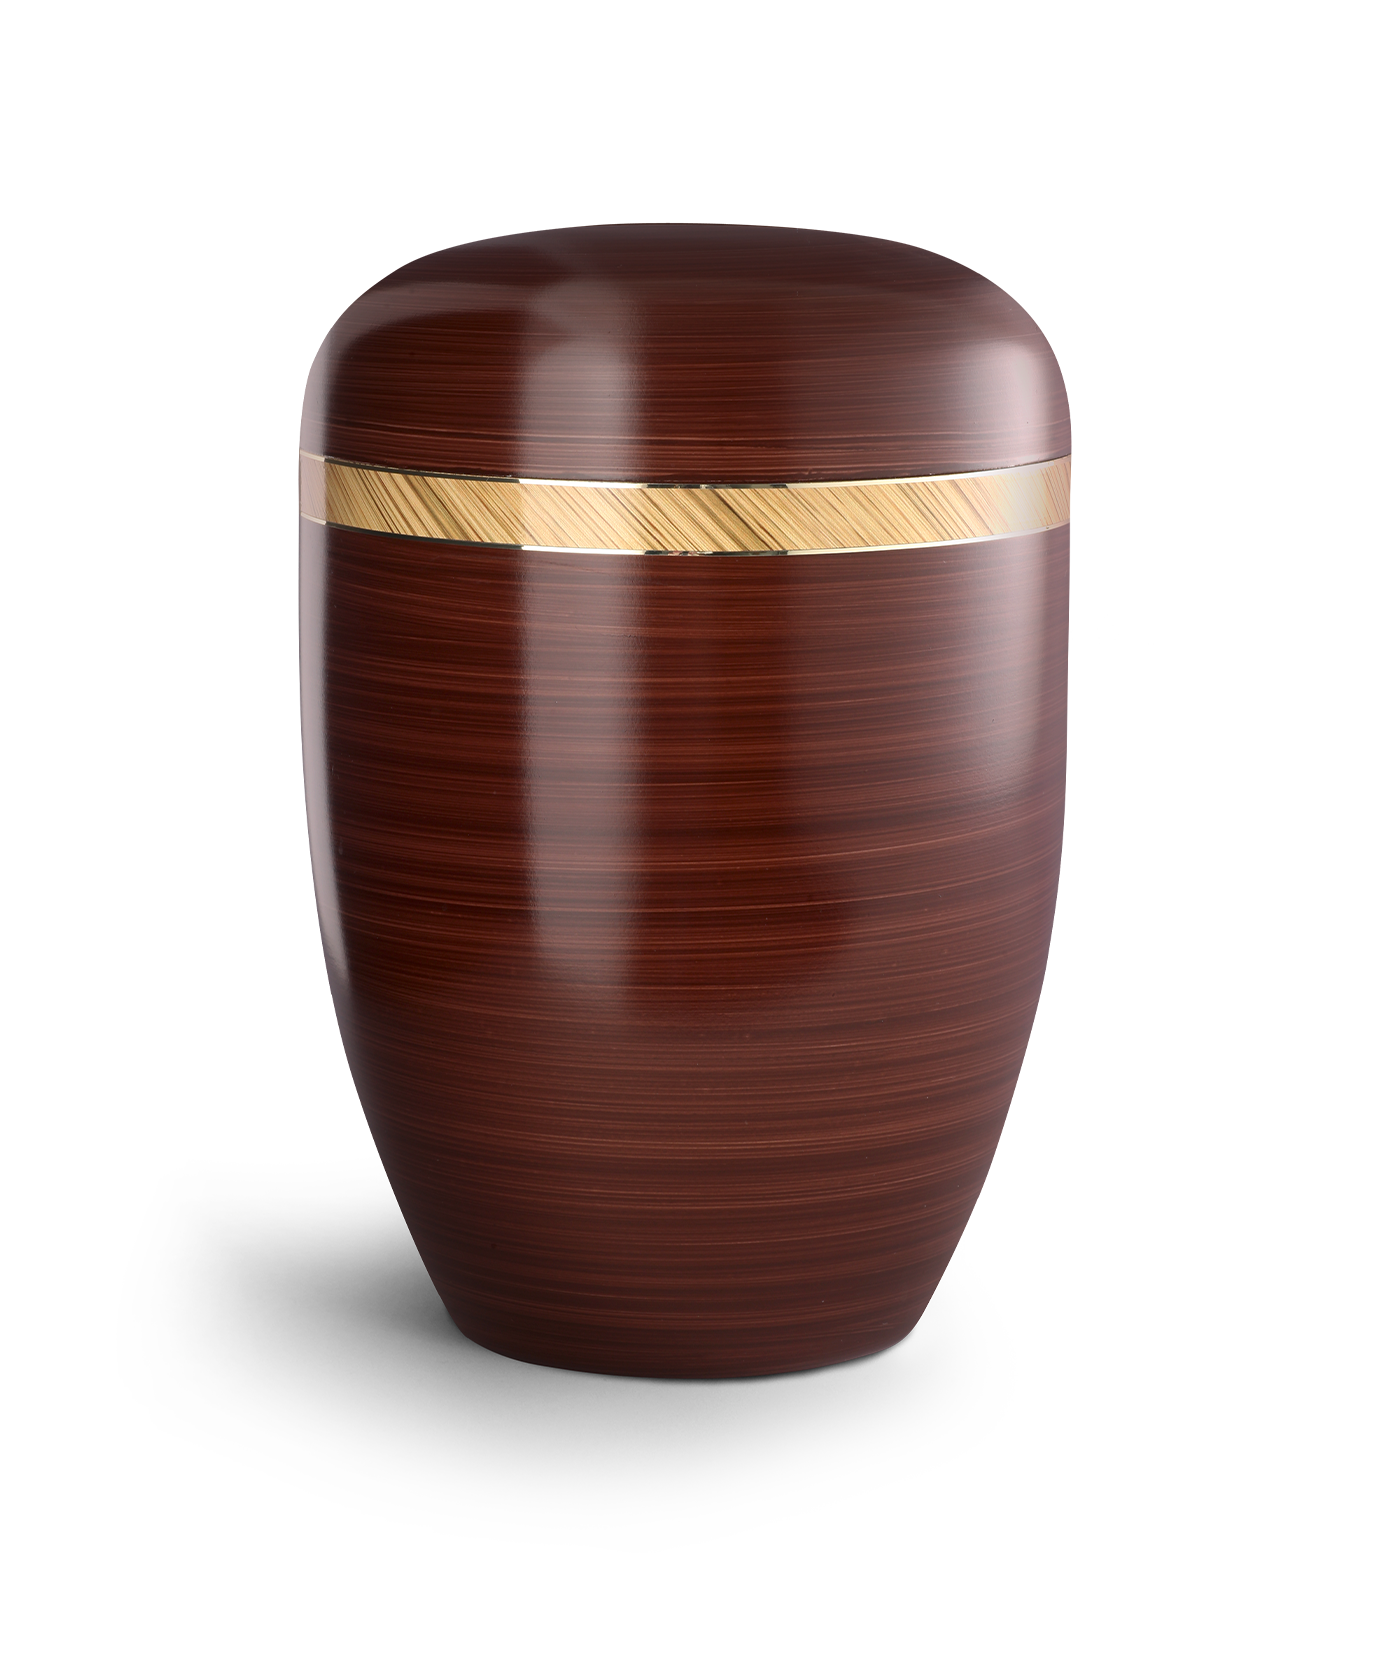 Völsing urn Edition Wood Line hand-painted